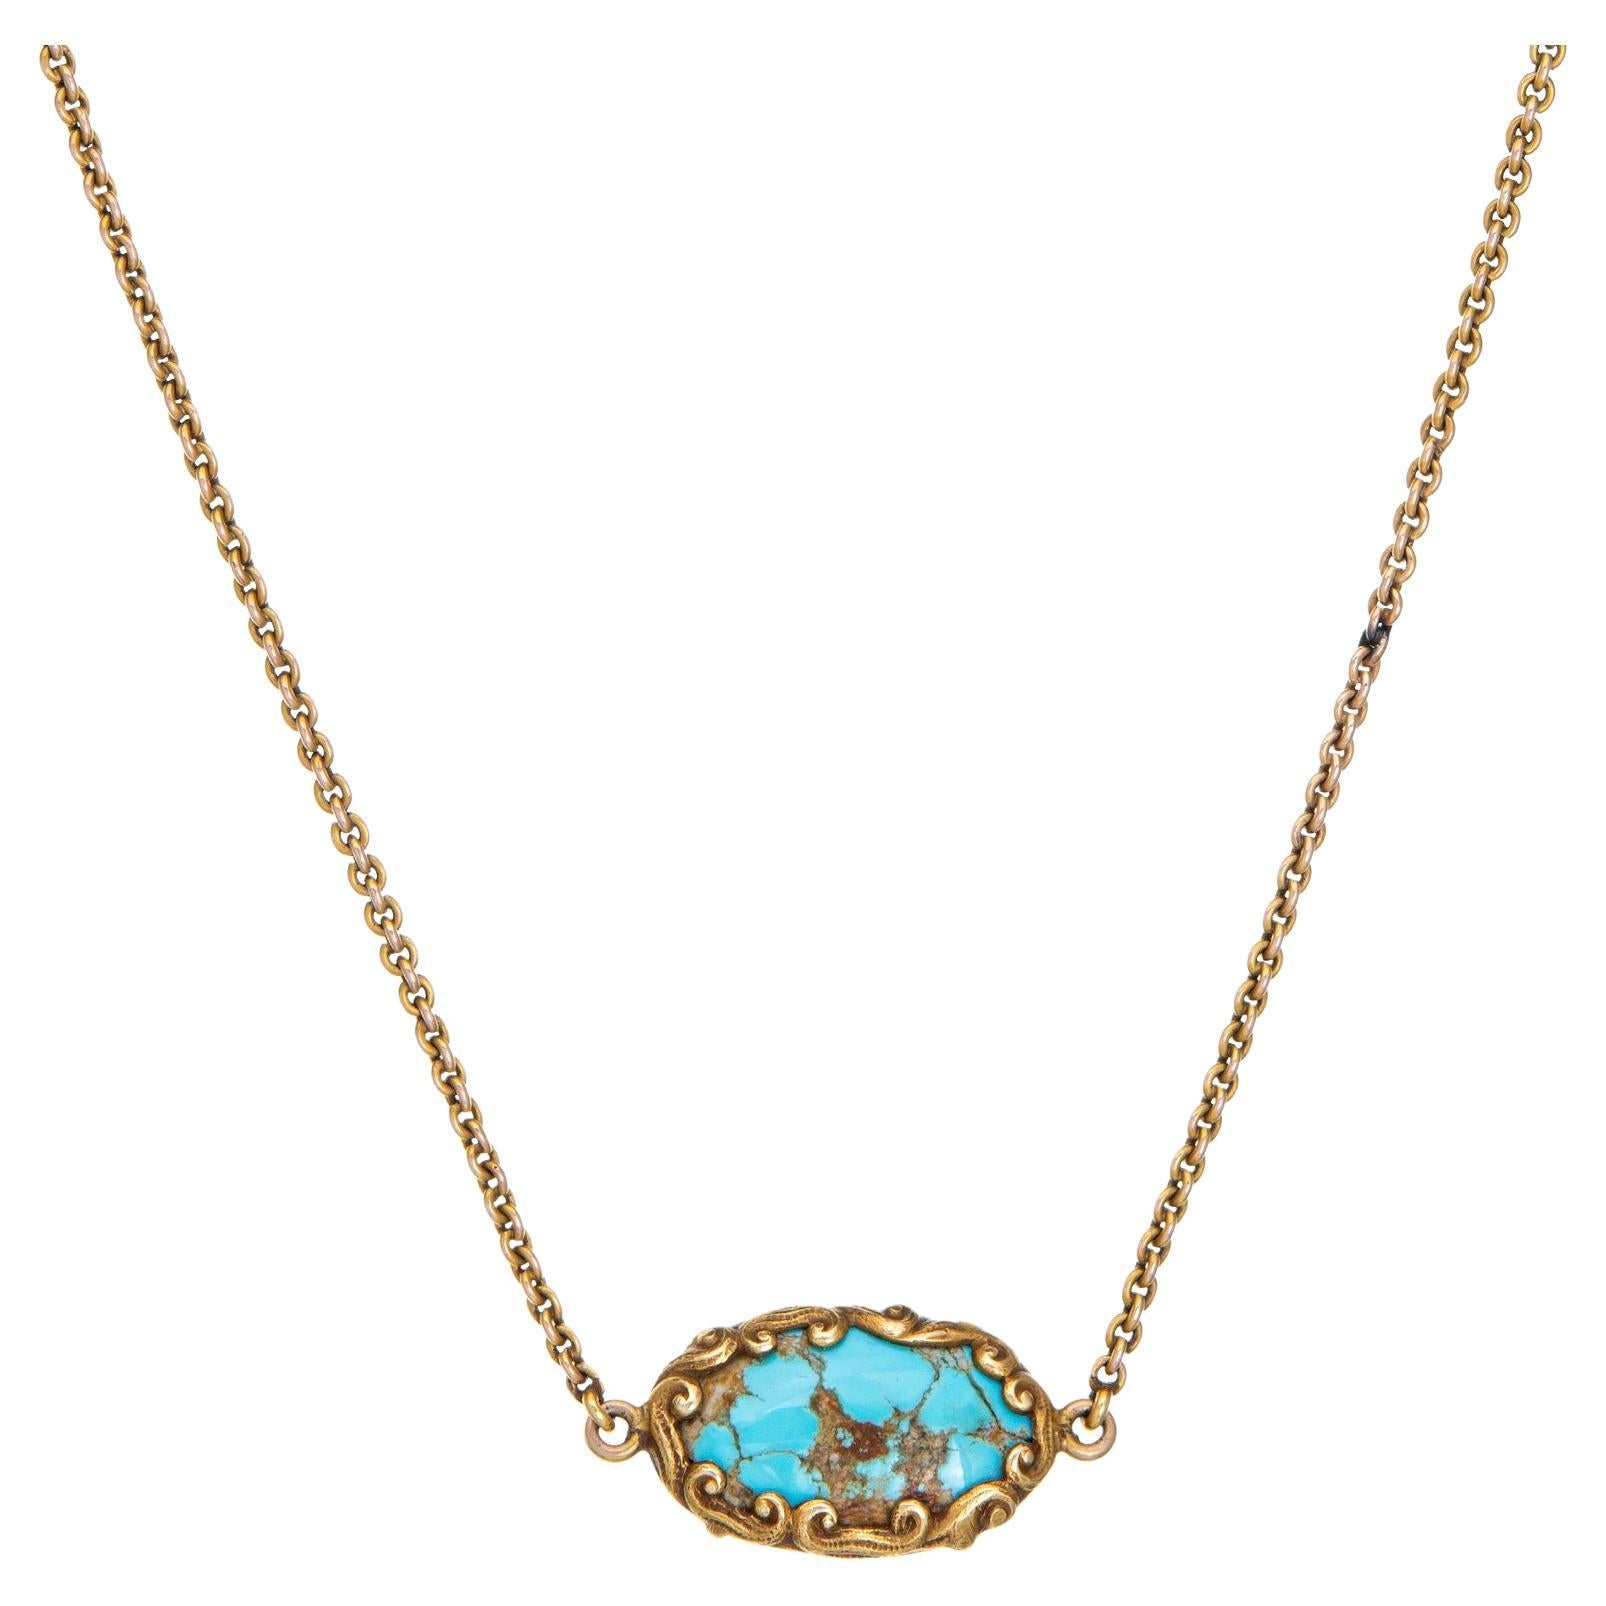 Antique Art Nouveau Necklace Turquoise 14k Yellow Gold 16.5" Watch Chain  For Sale